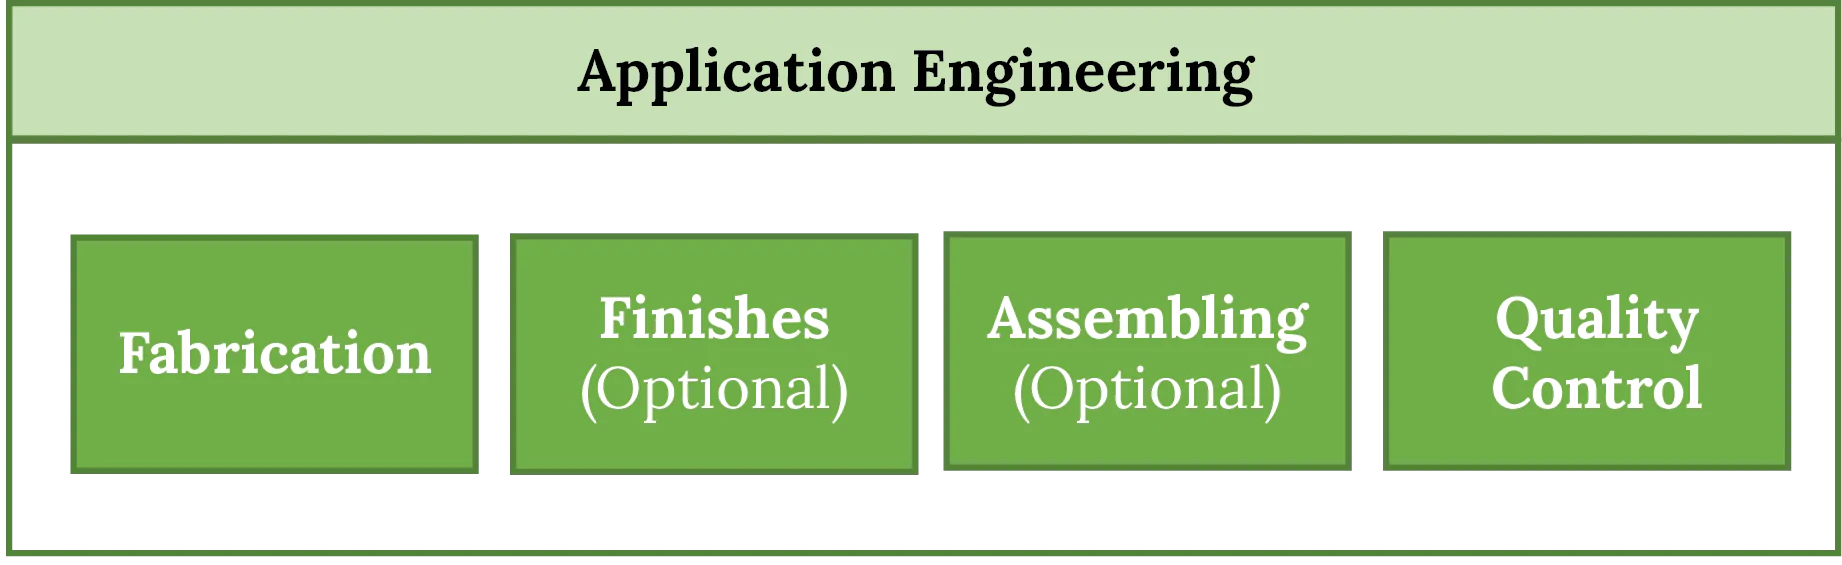 Application Engineering